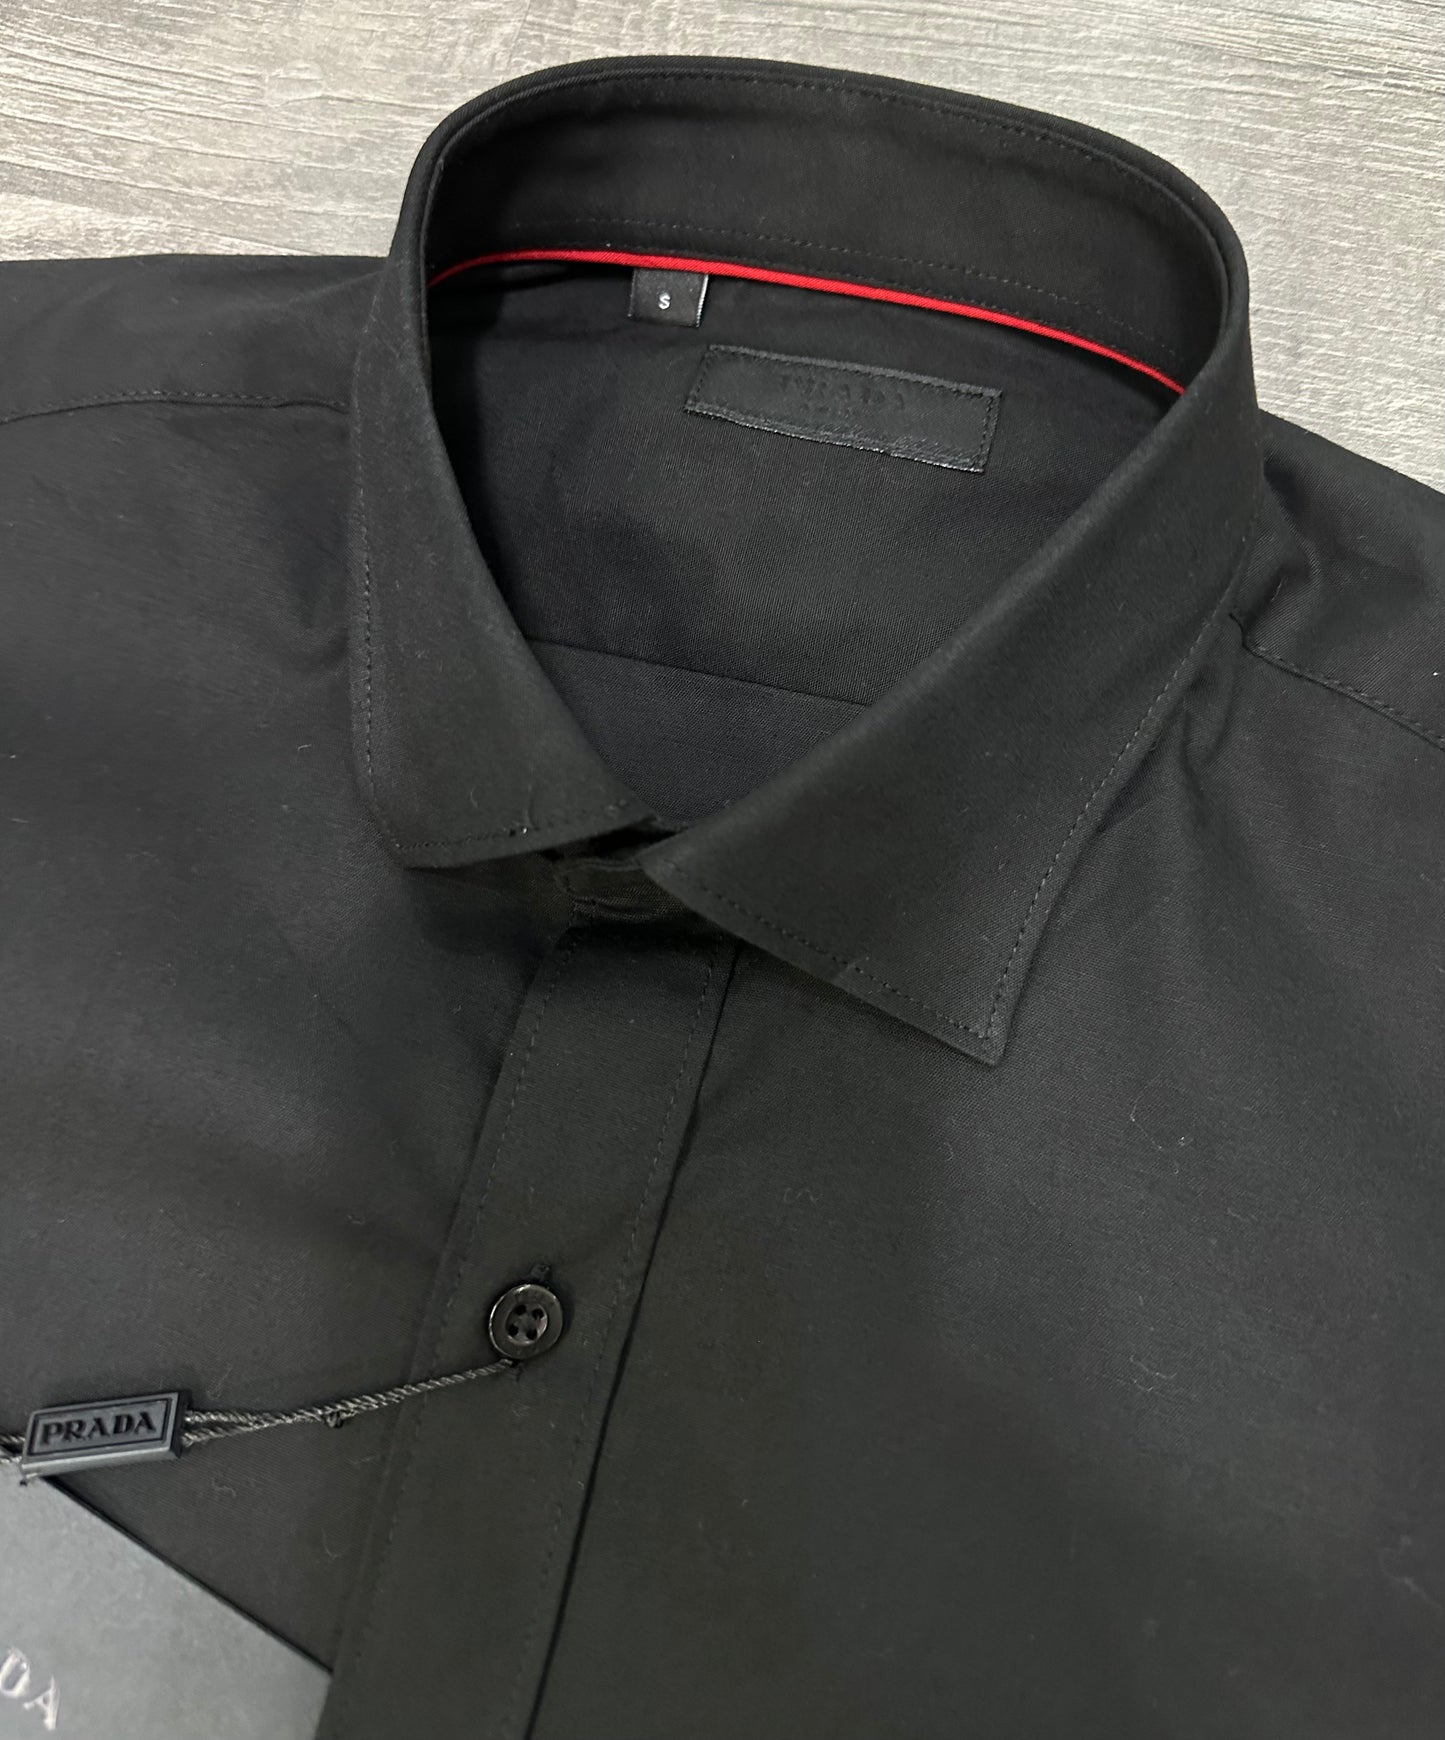 Prada Shirt Classic Black 44